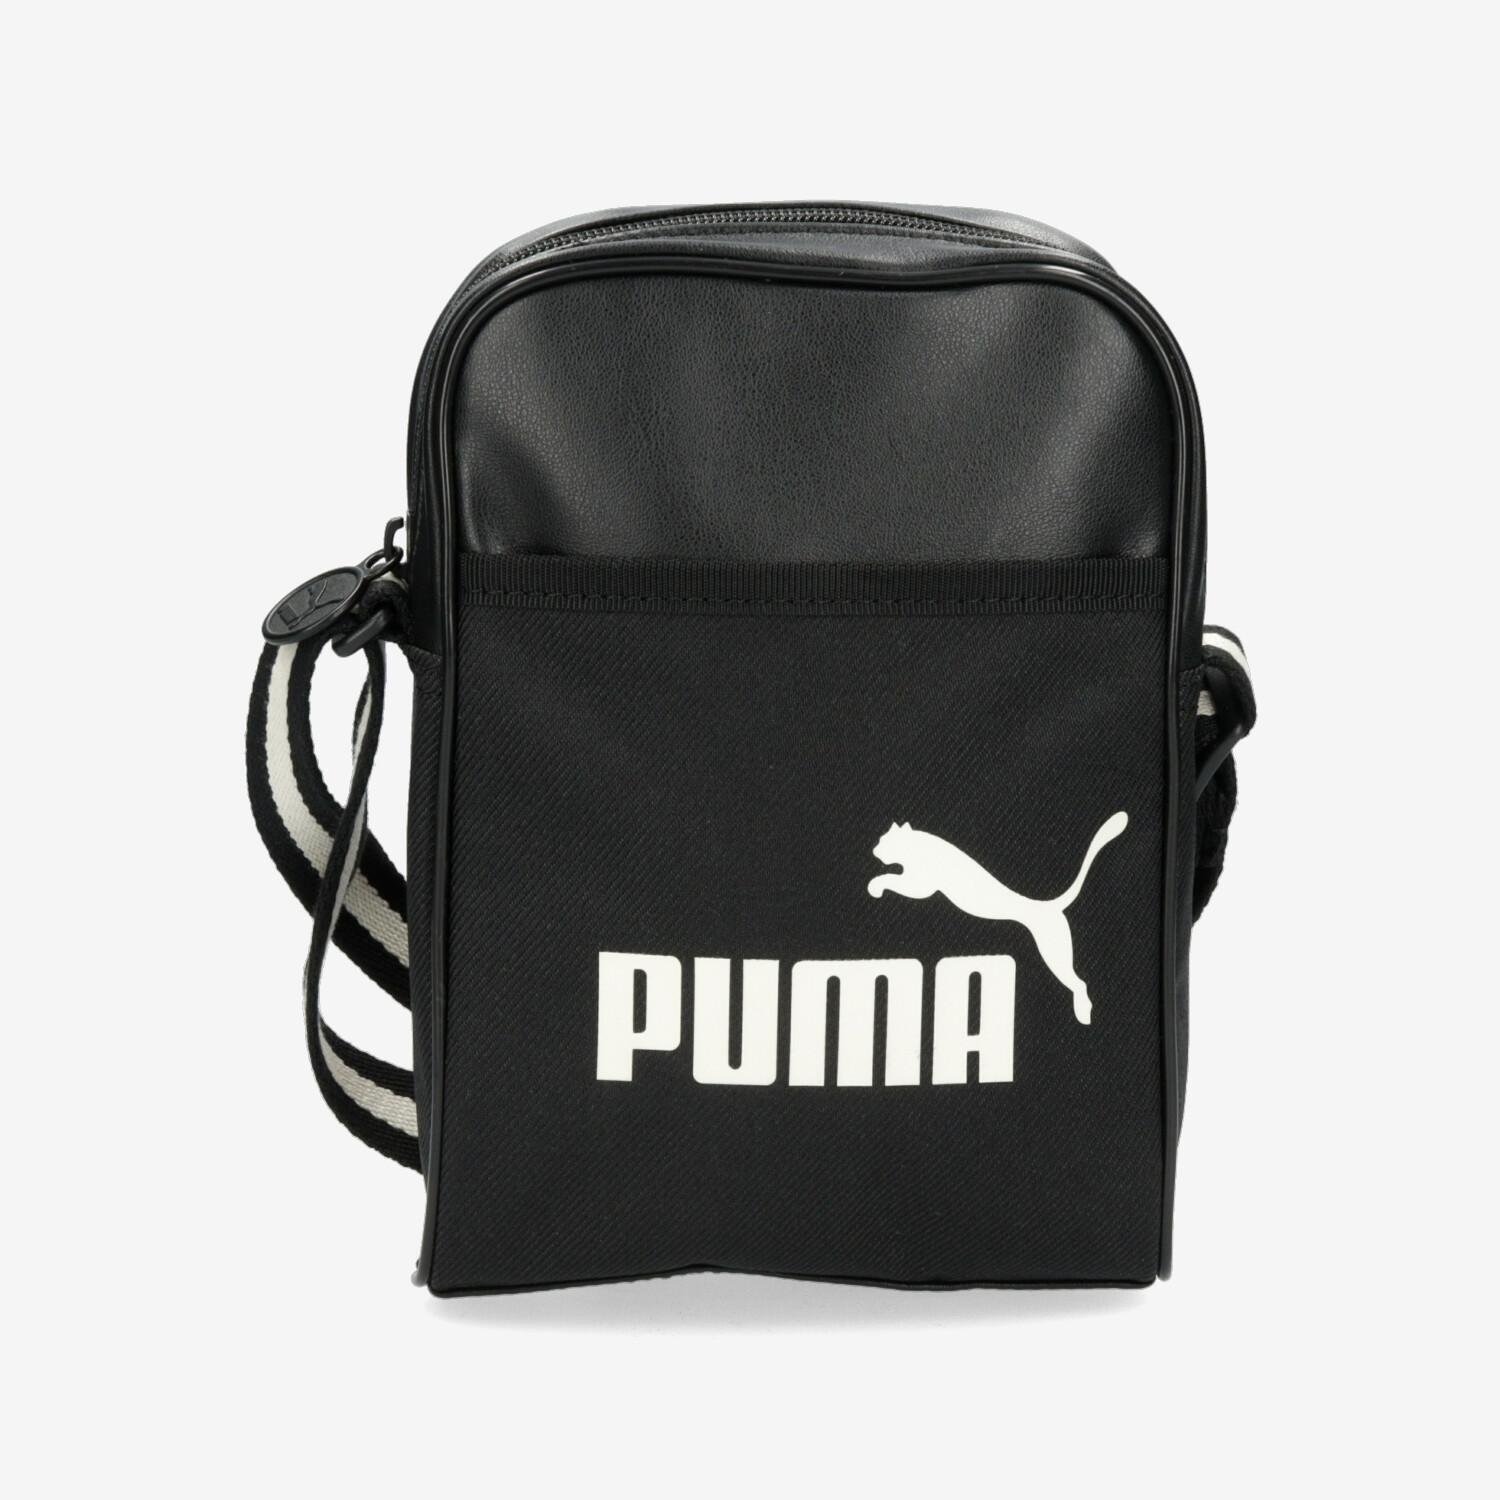 Puma Puma campus compact schoudertas zwart kinderen